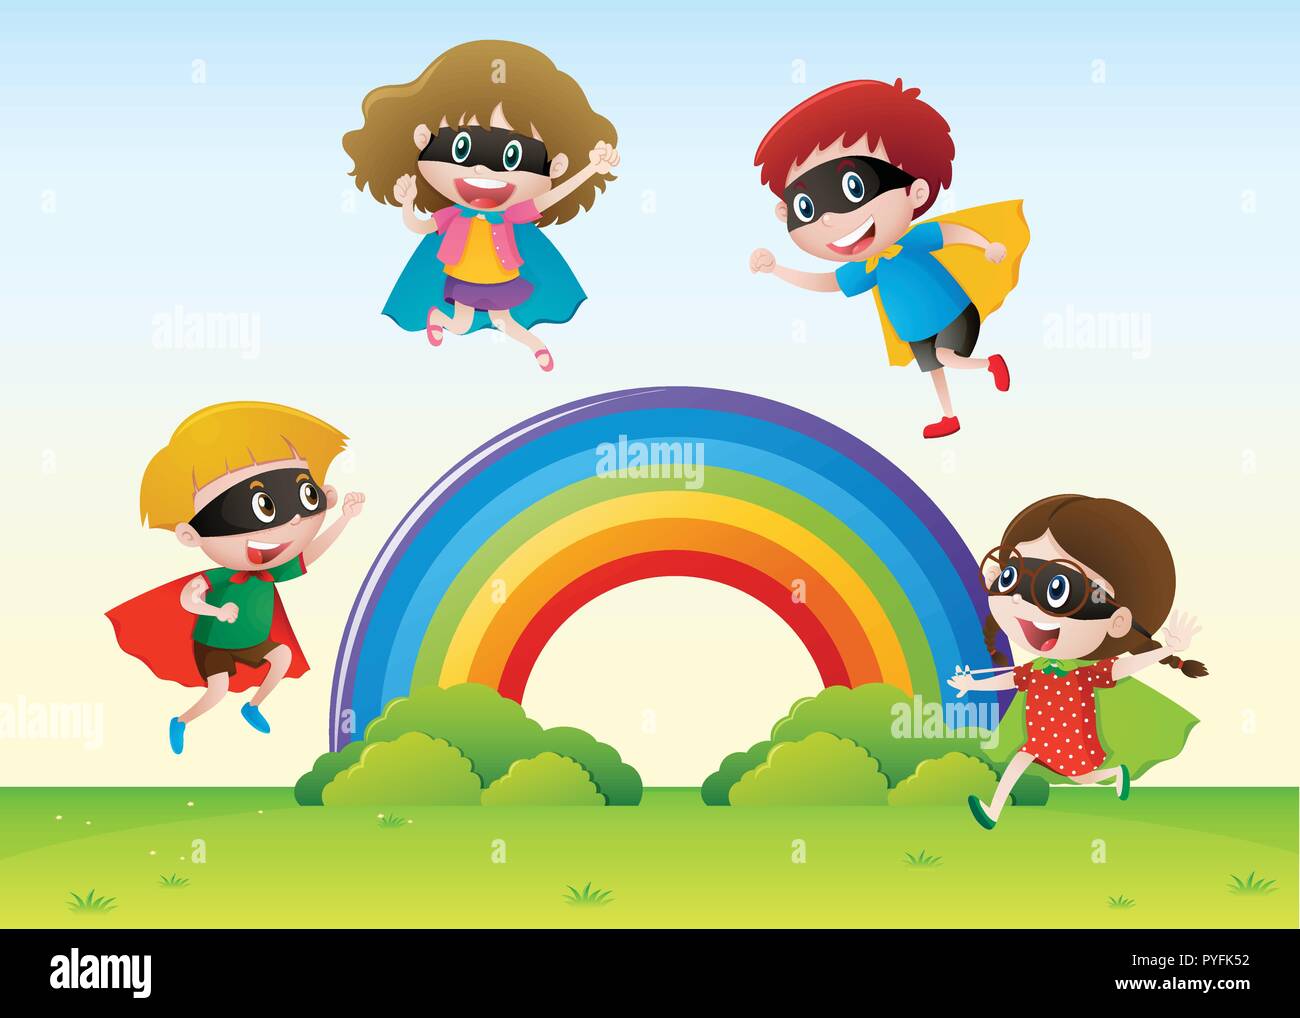 Kinder verkleidet als Held in park Abbildung flying Stock Vektor